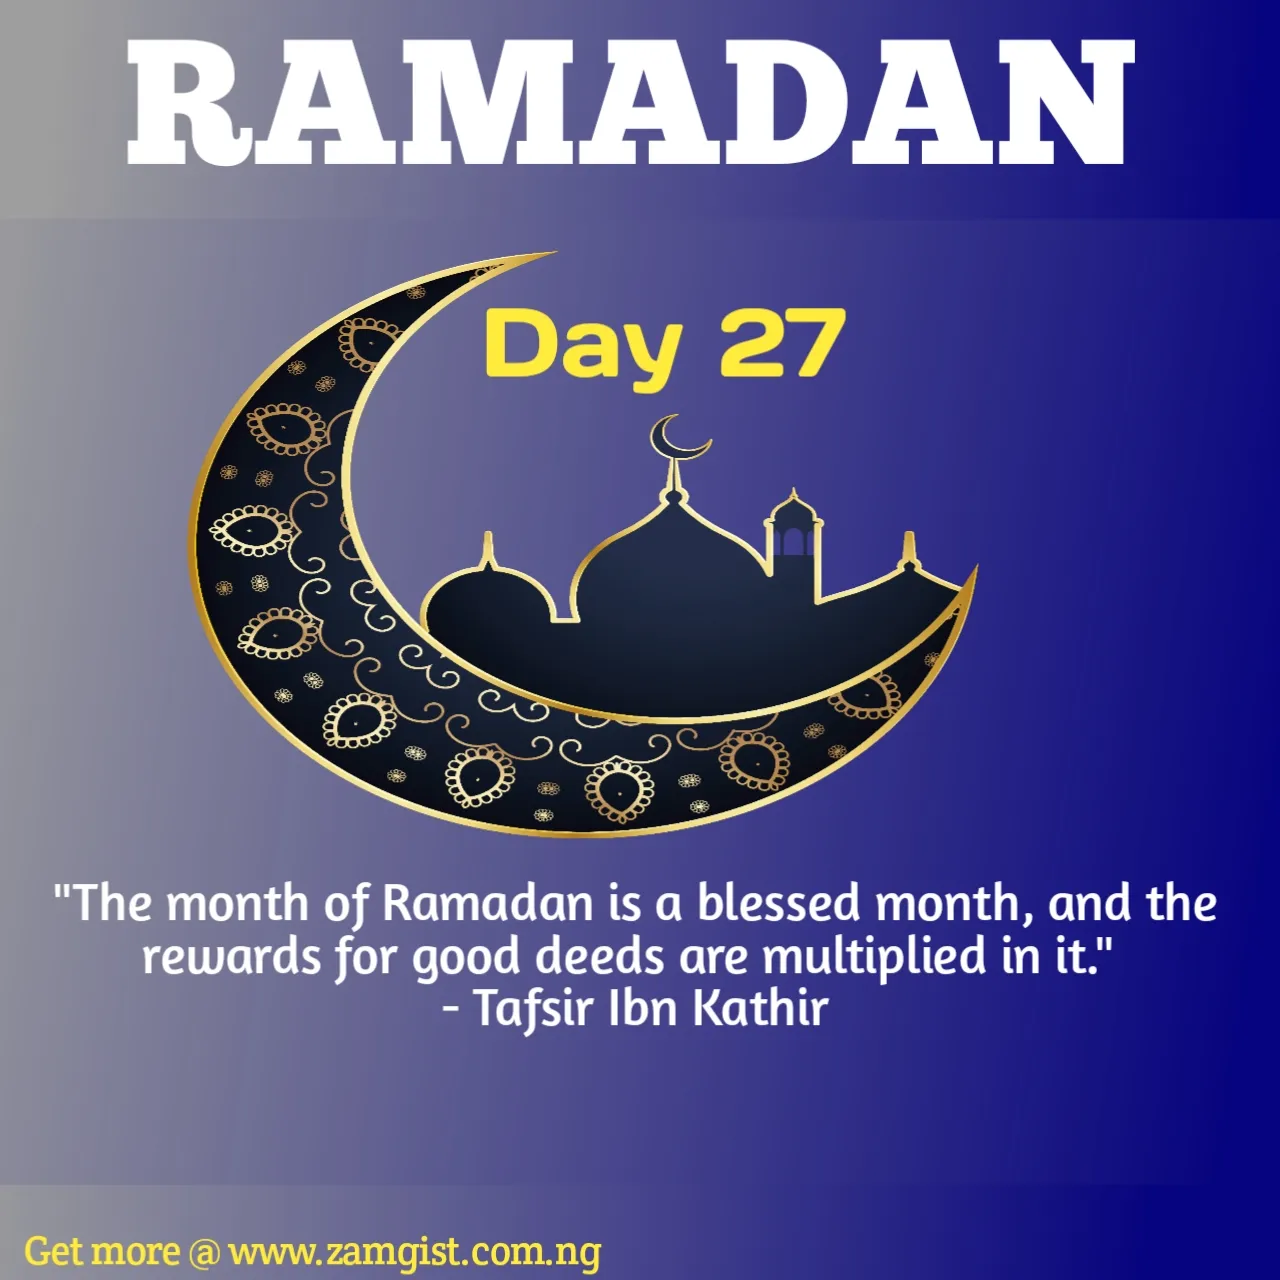 Ramadan day 27 image